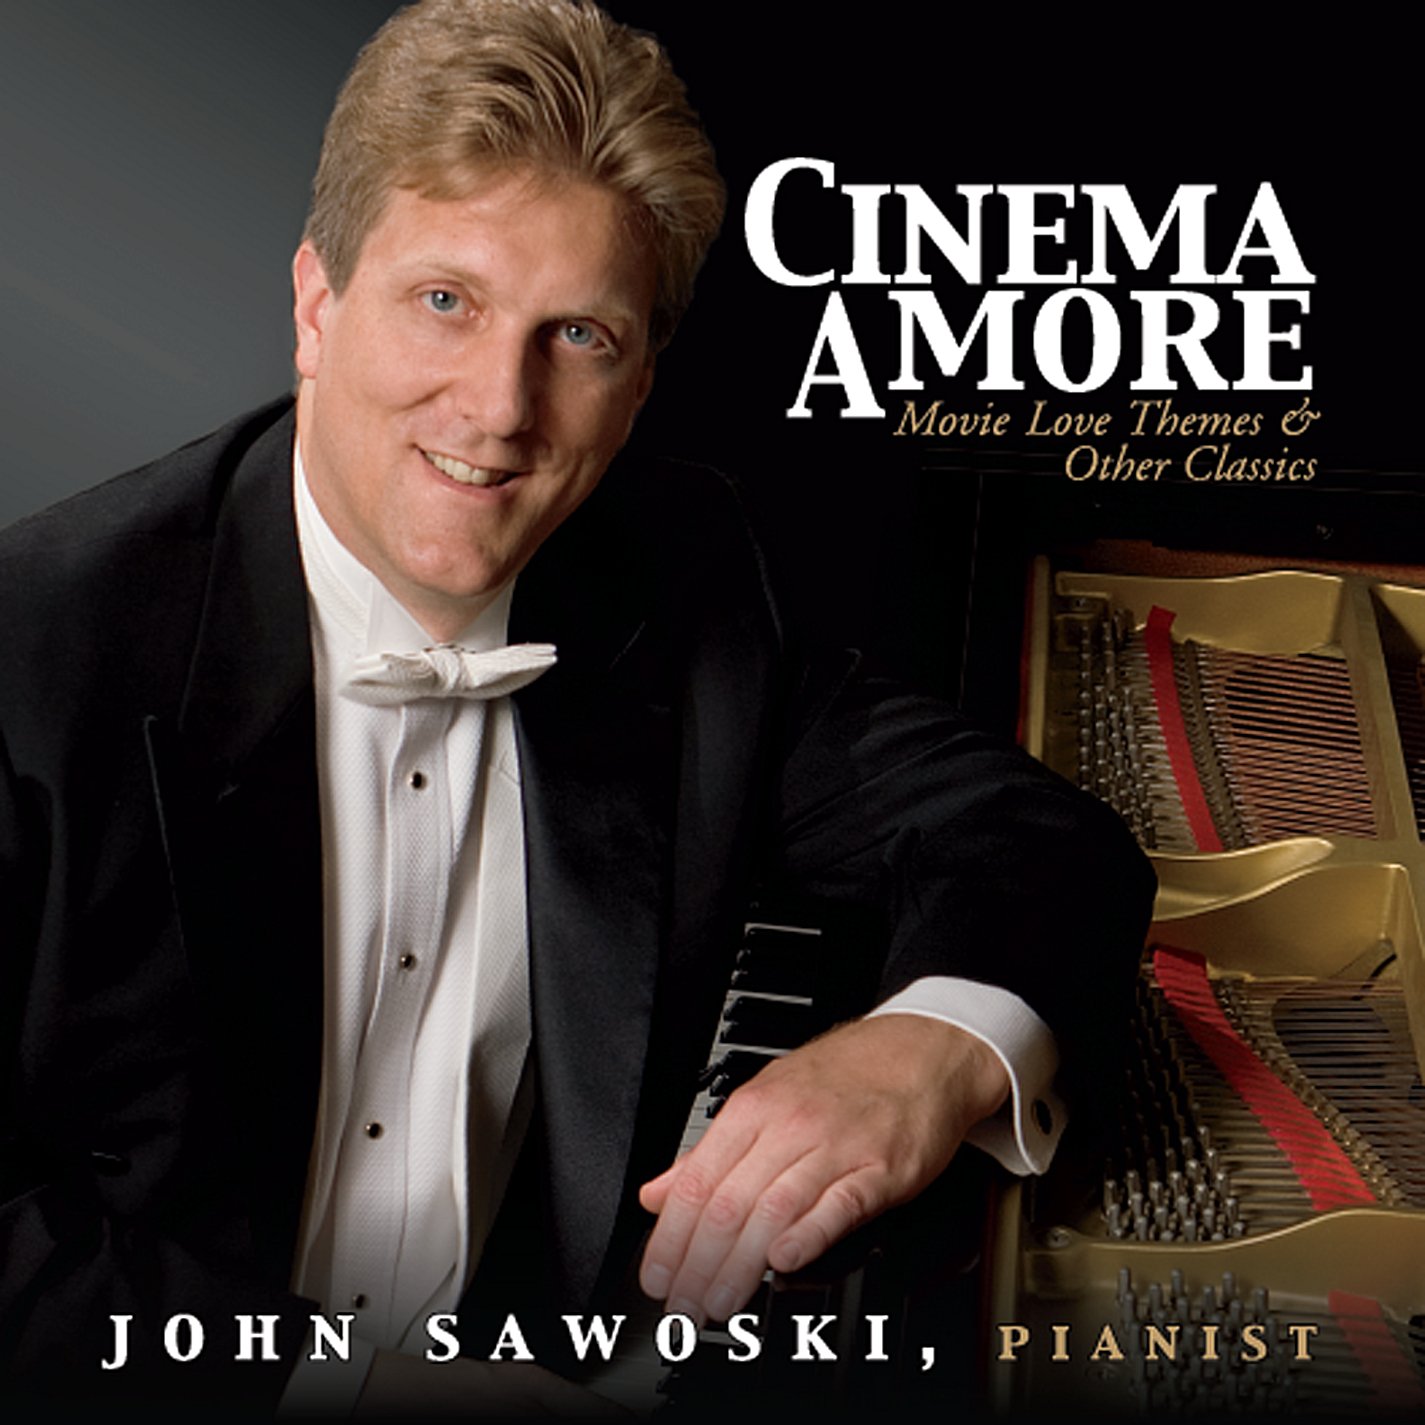 John Sawoski’s “Cinema Amore” – A Brief Video Introduction